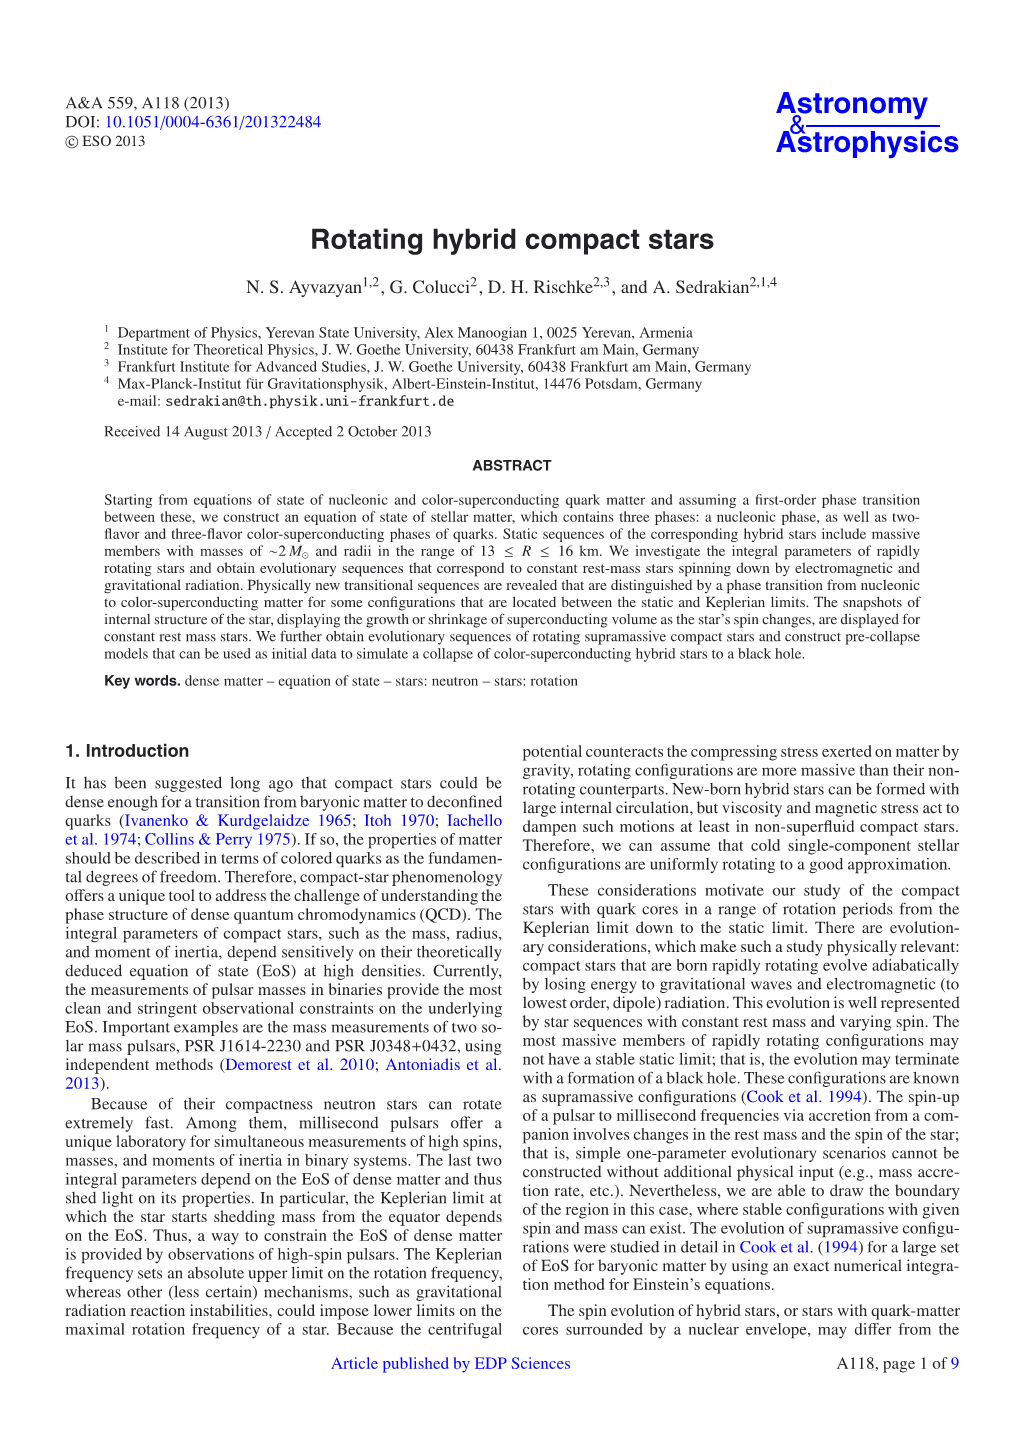 Rotating Hybrid Compact Stars